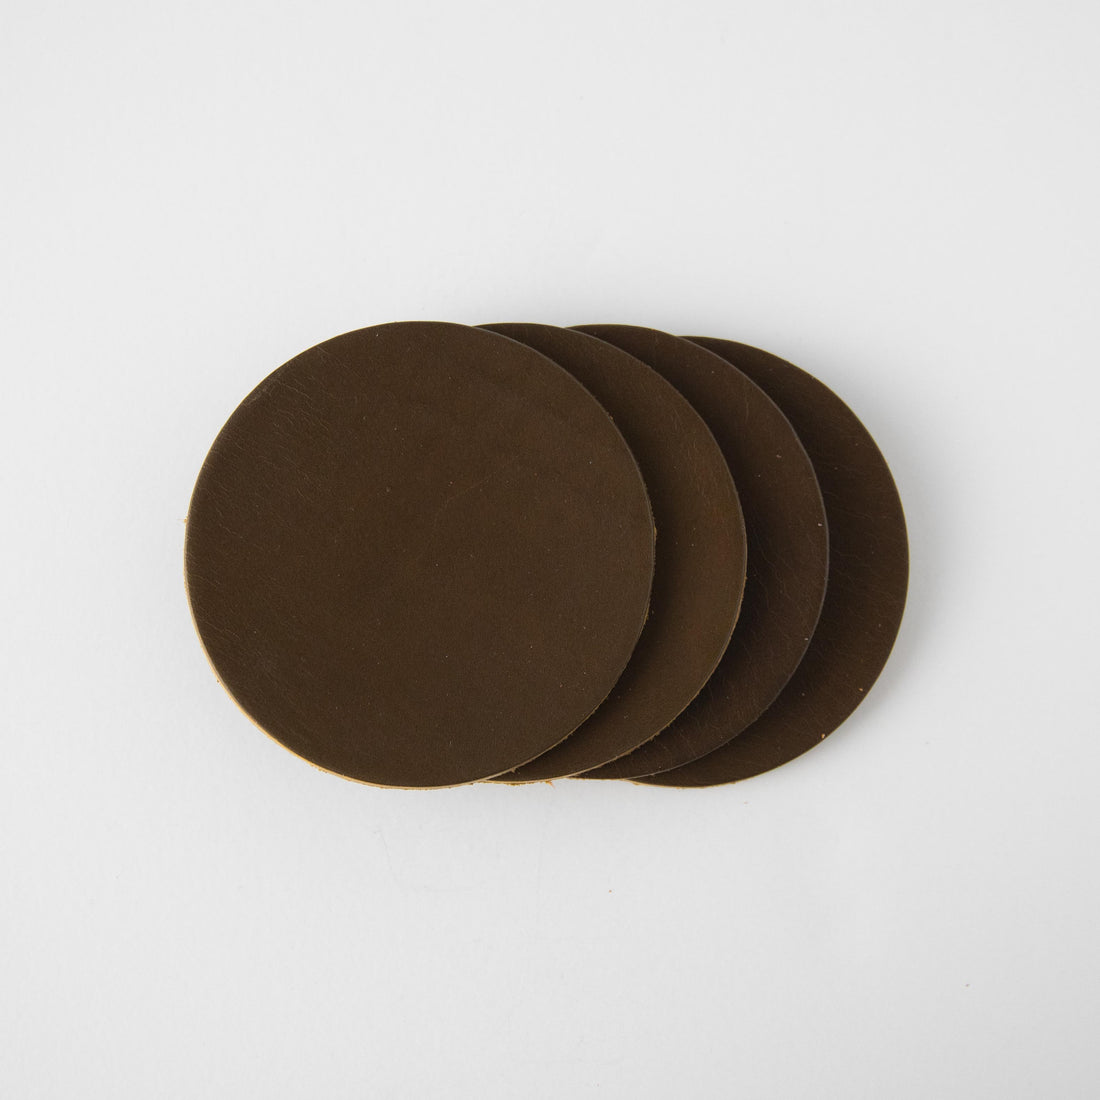 Olive Leather Coasters